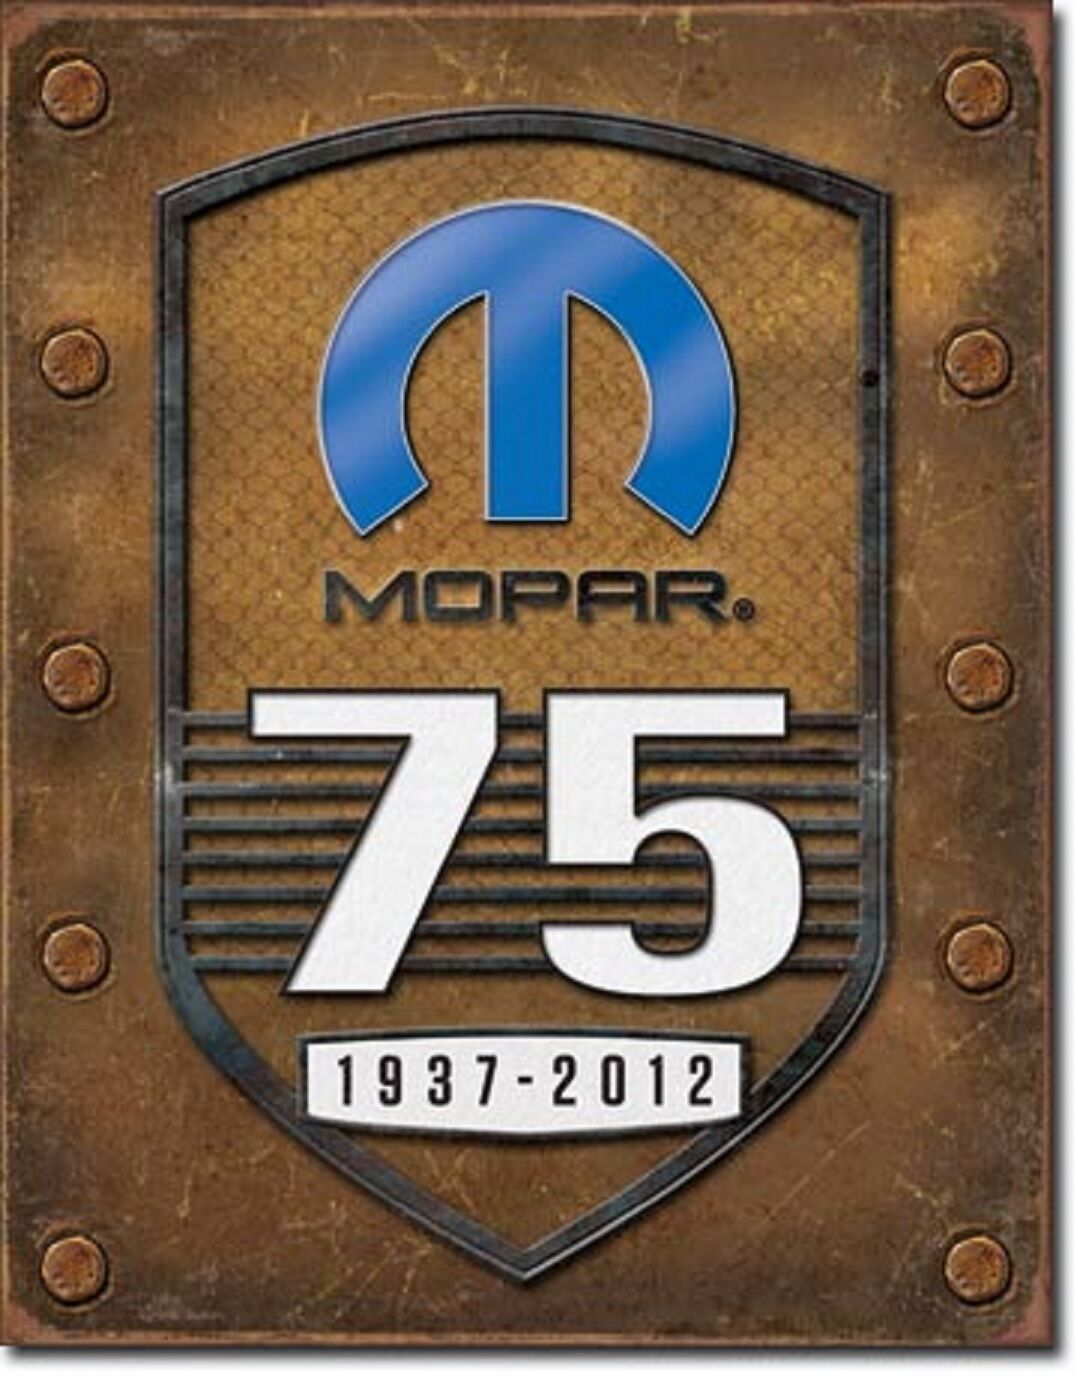 Mopar 75 1937-2012 TIN SIGN metal poster vintage chevy garage ad wall decor 1843